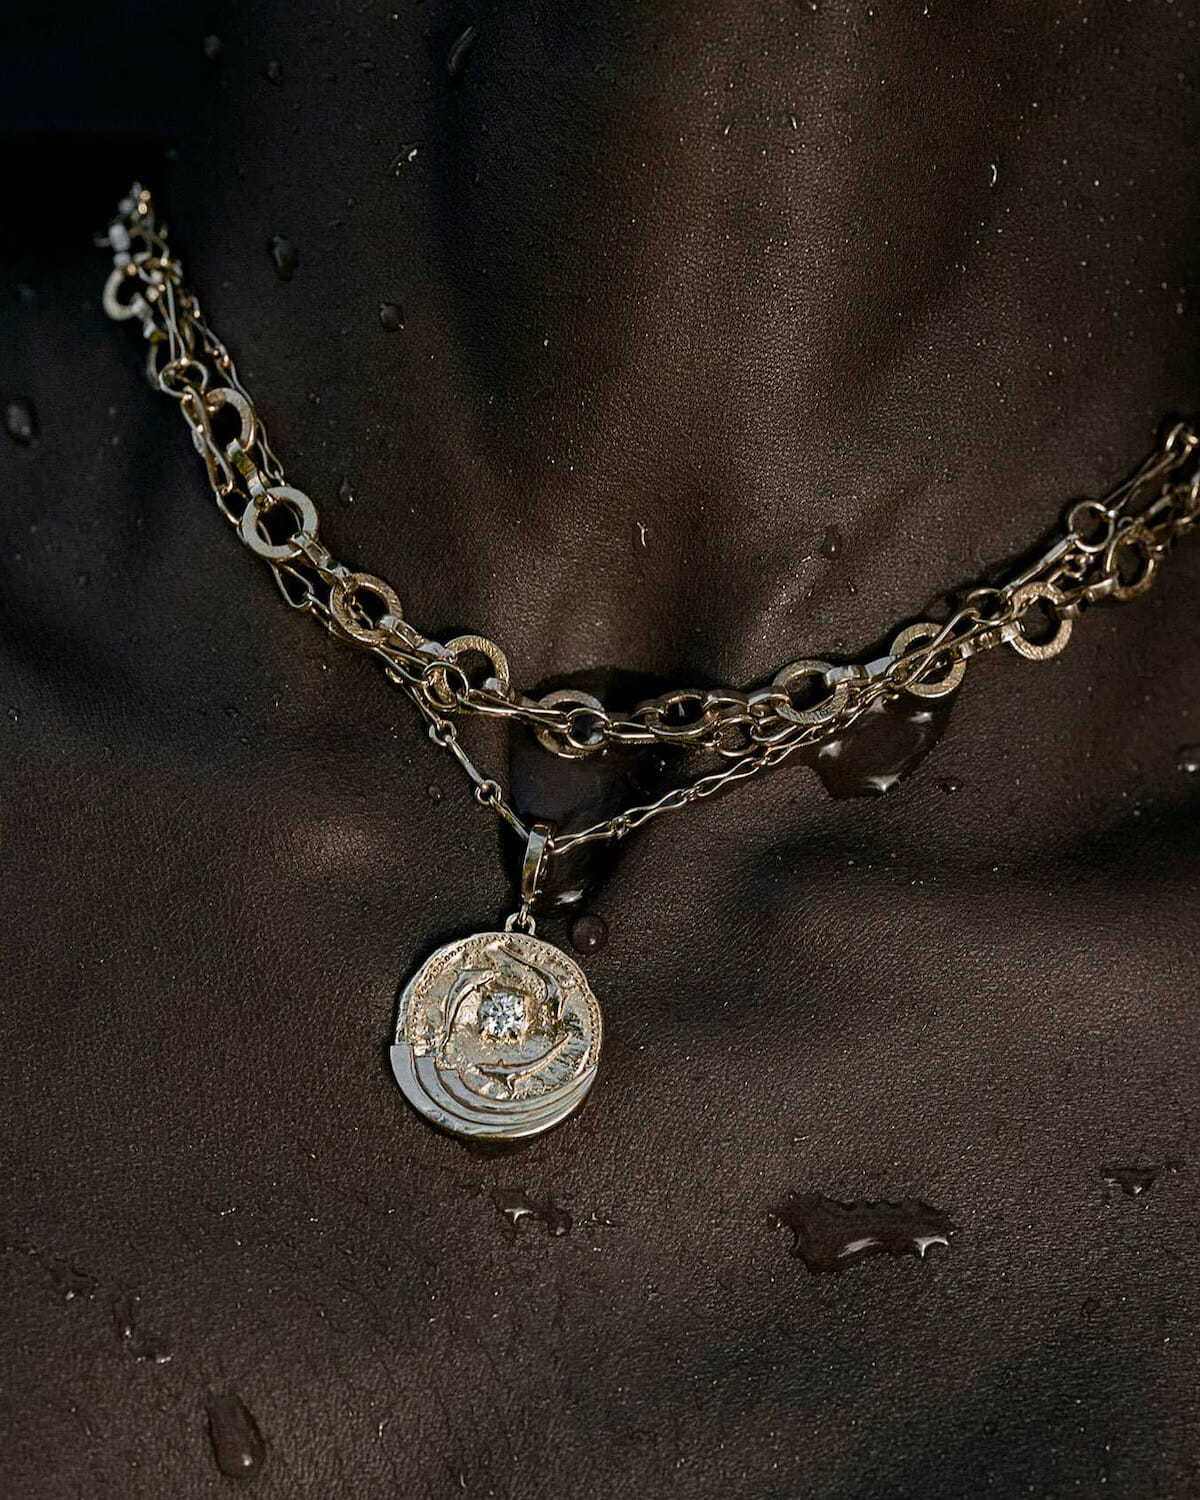 Diamond necklace from sustainable jewellery brand AZLEE